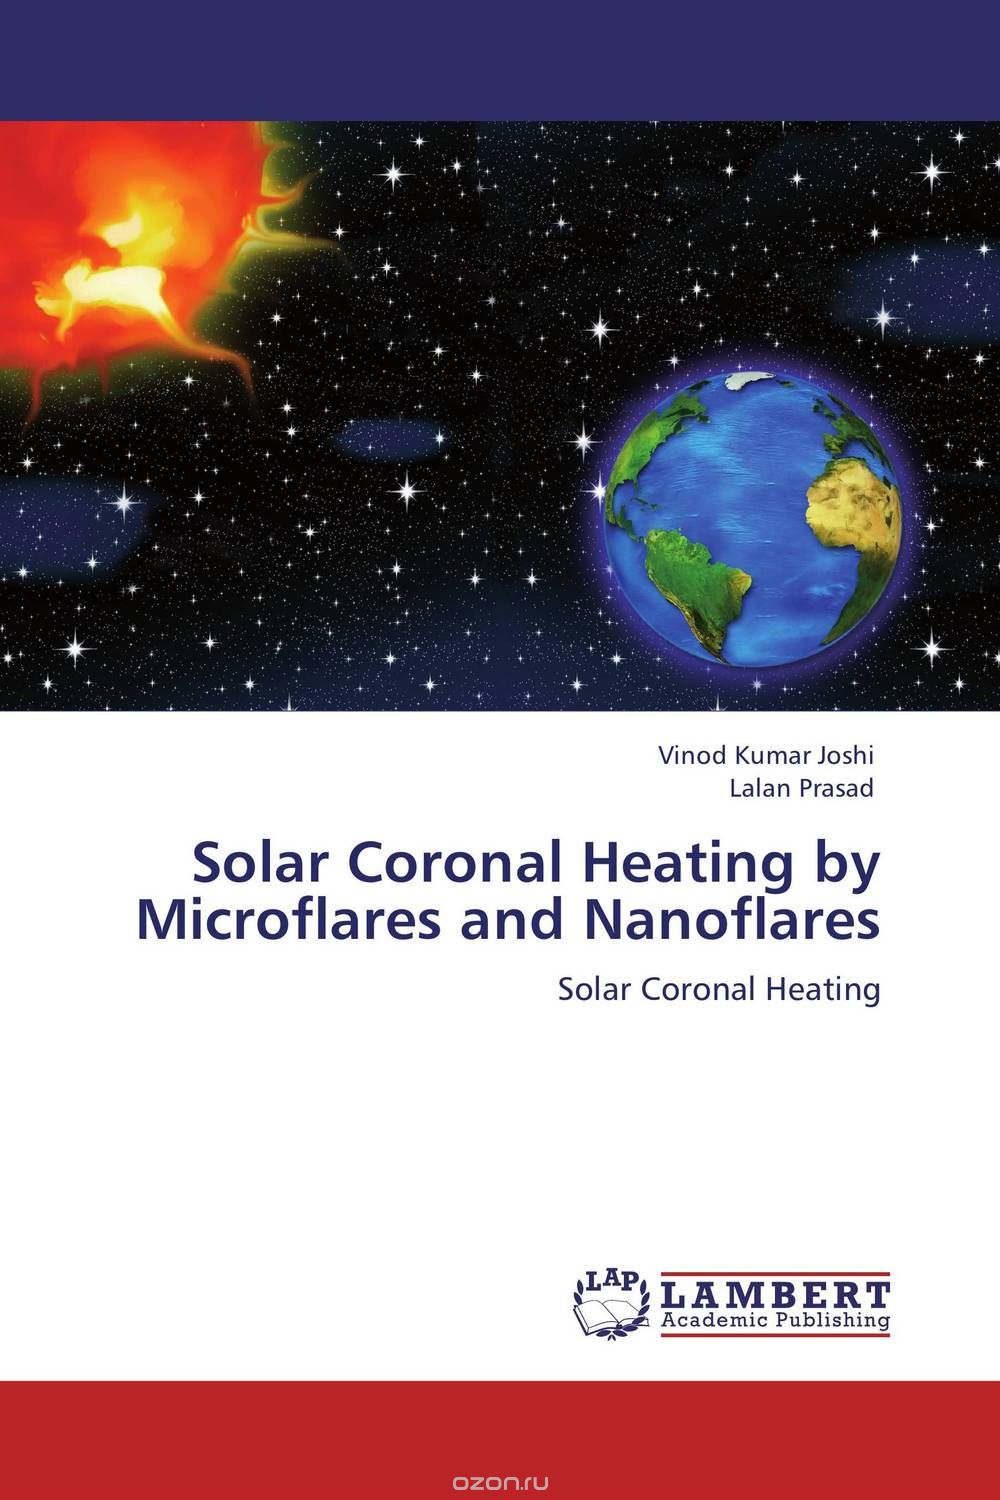 Скачать книгу "Solar Coronal Heating by Microflares and Nanoflares"